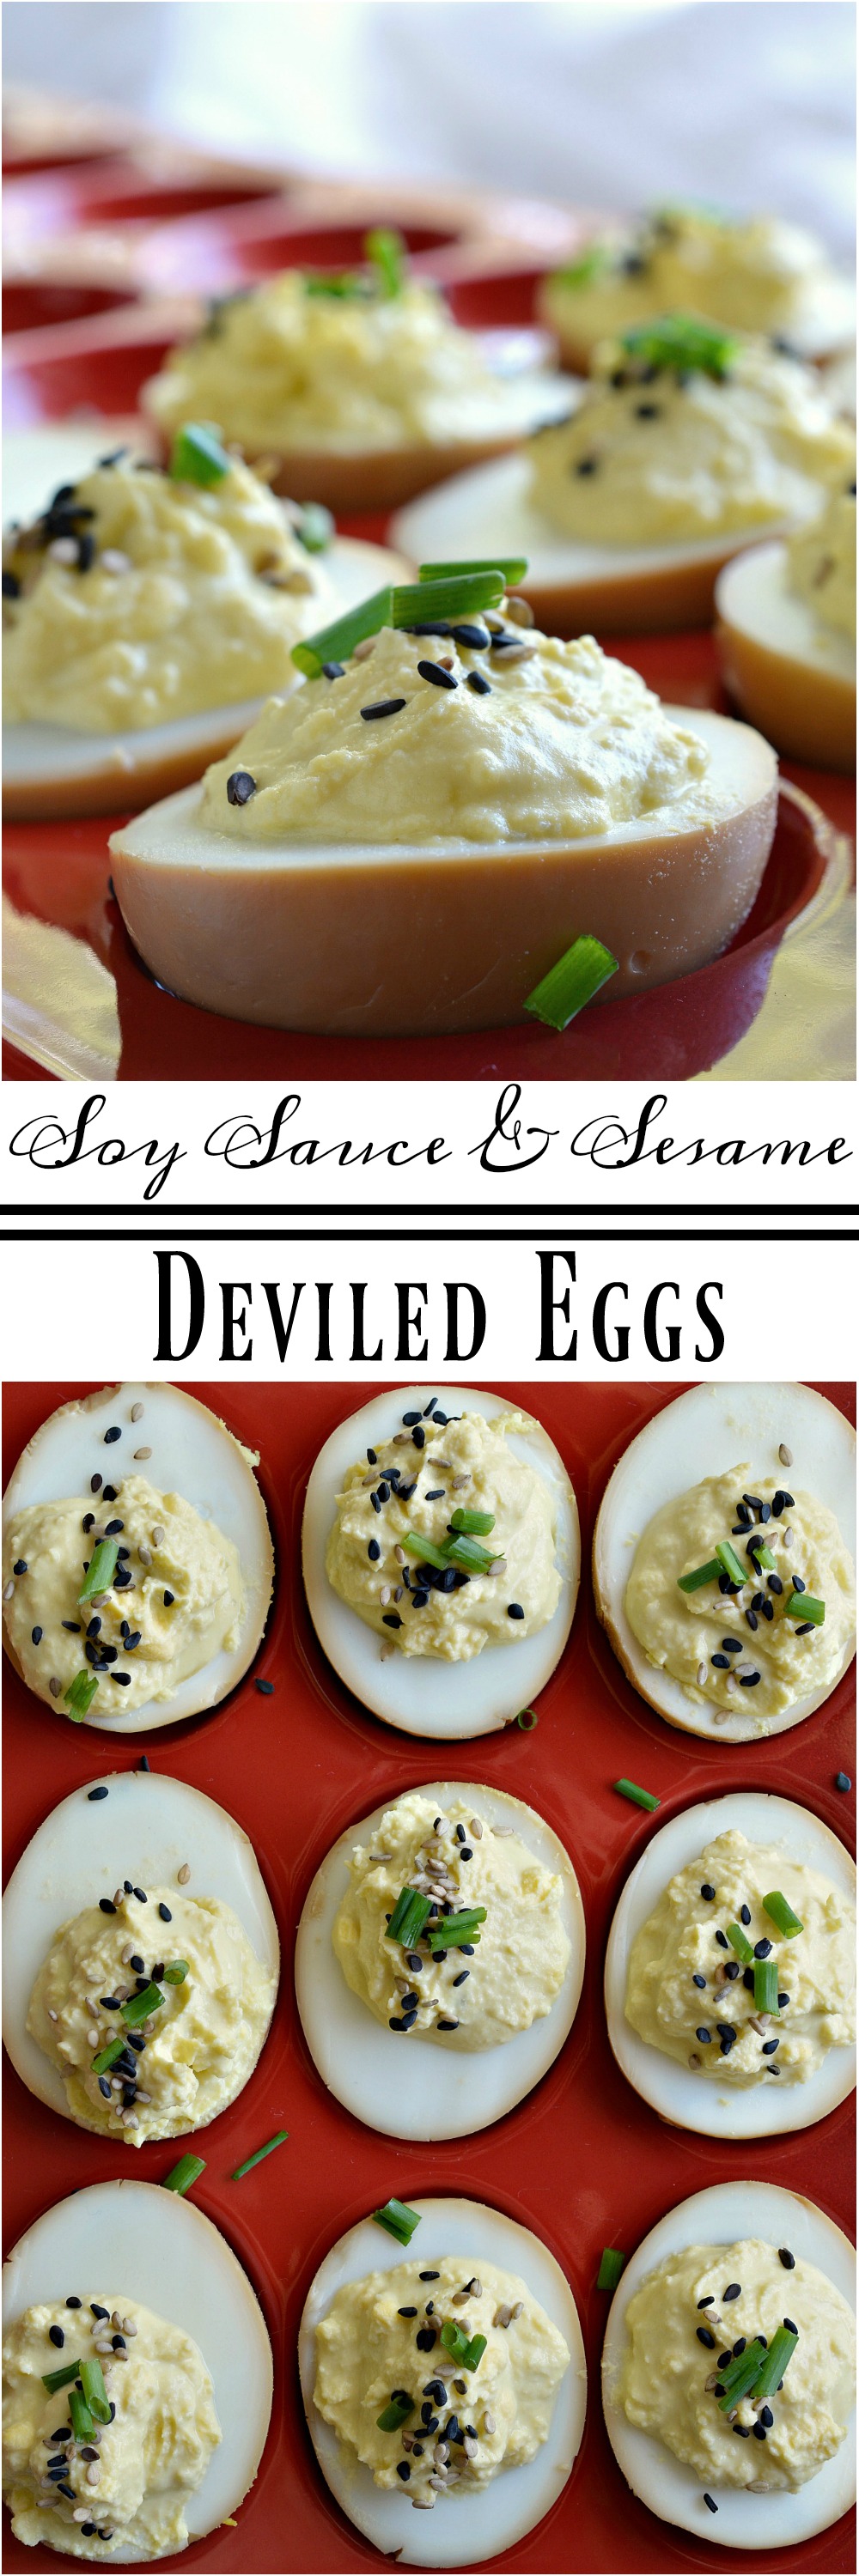 Deviled Soy Sauce Eggs - WonkyWonderful